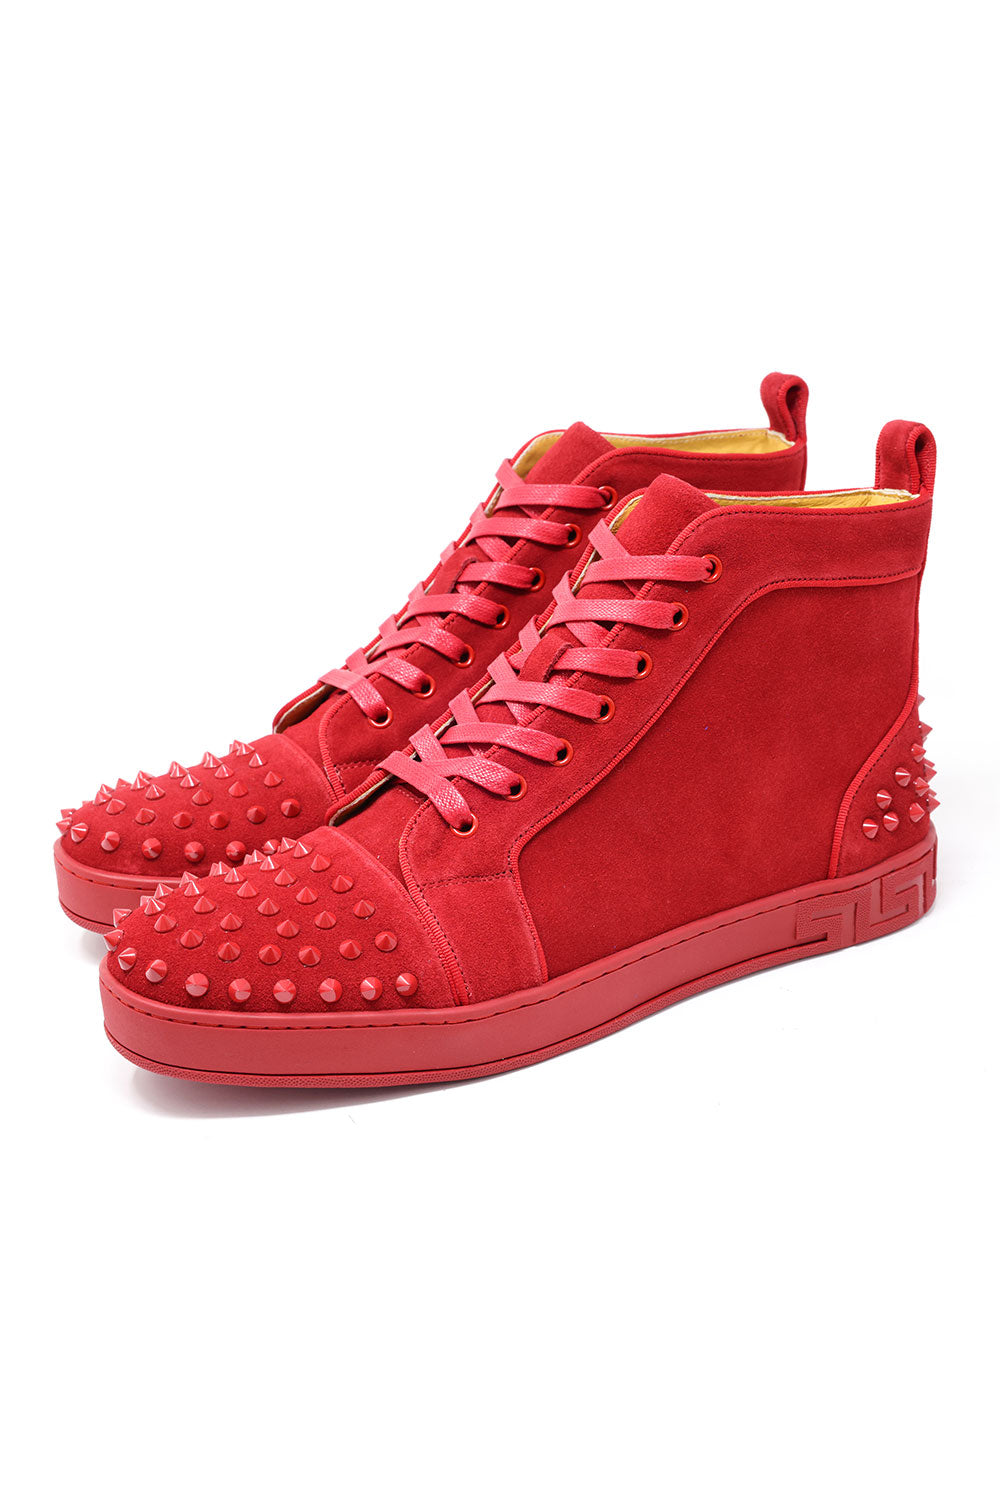 Barabas Men's Spike Design Luxury Suede High-Top Sneaker SH732 Red